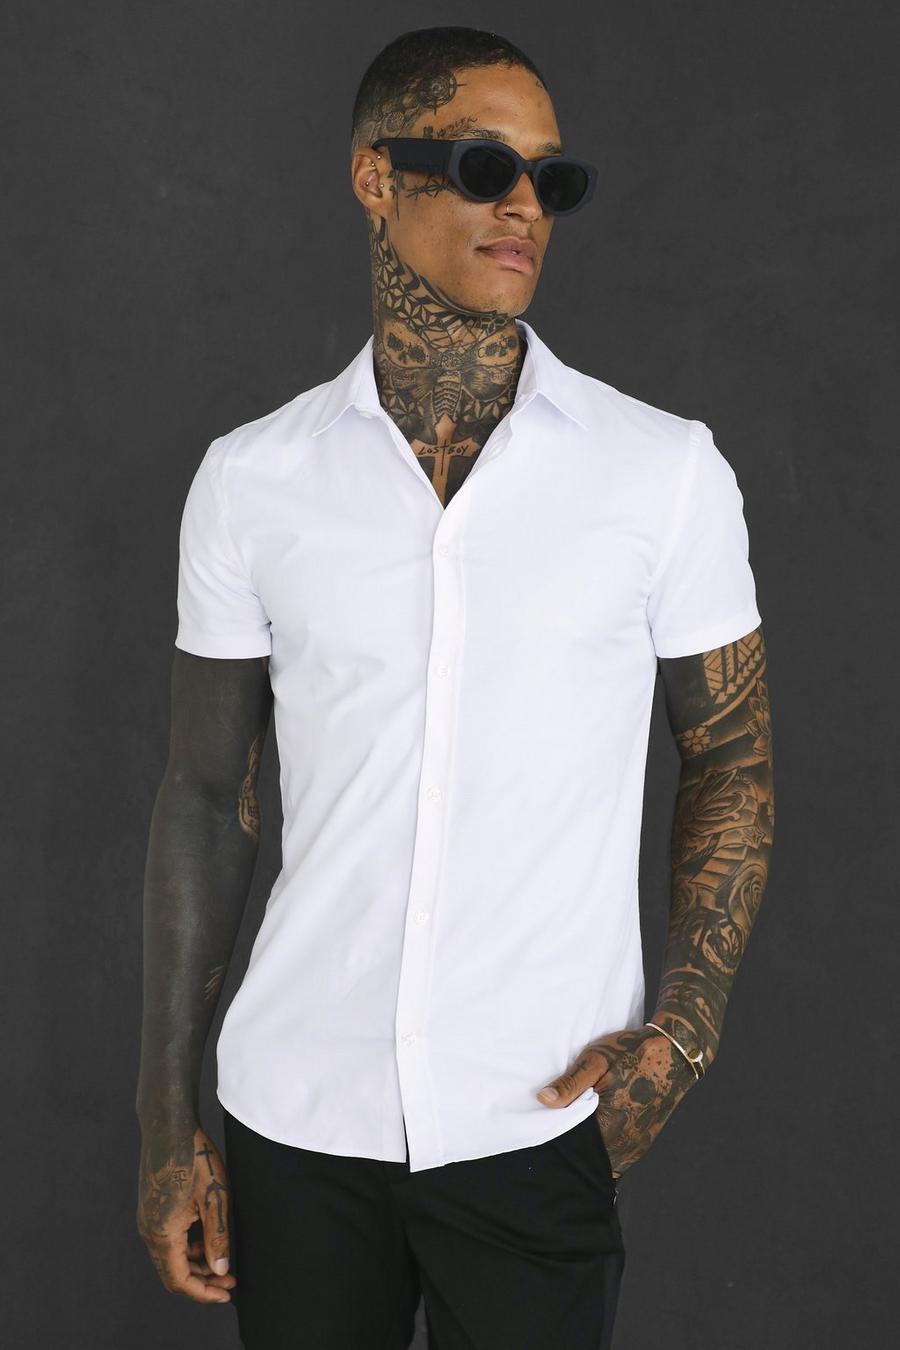 How should a men's short sleeve casual shirt fit?